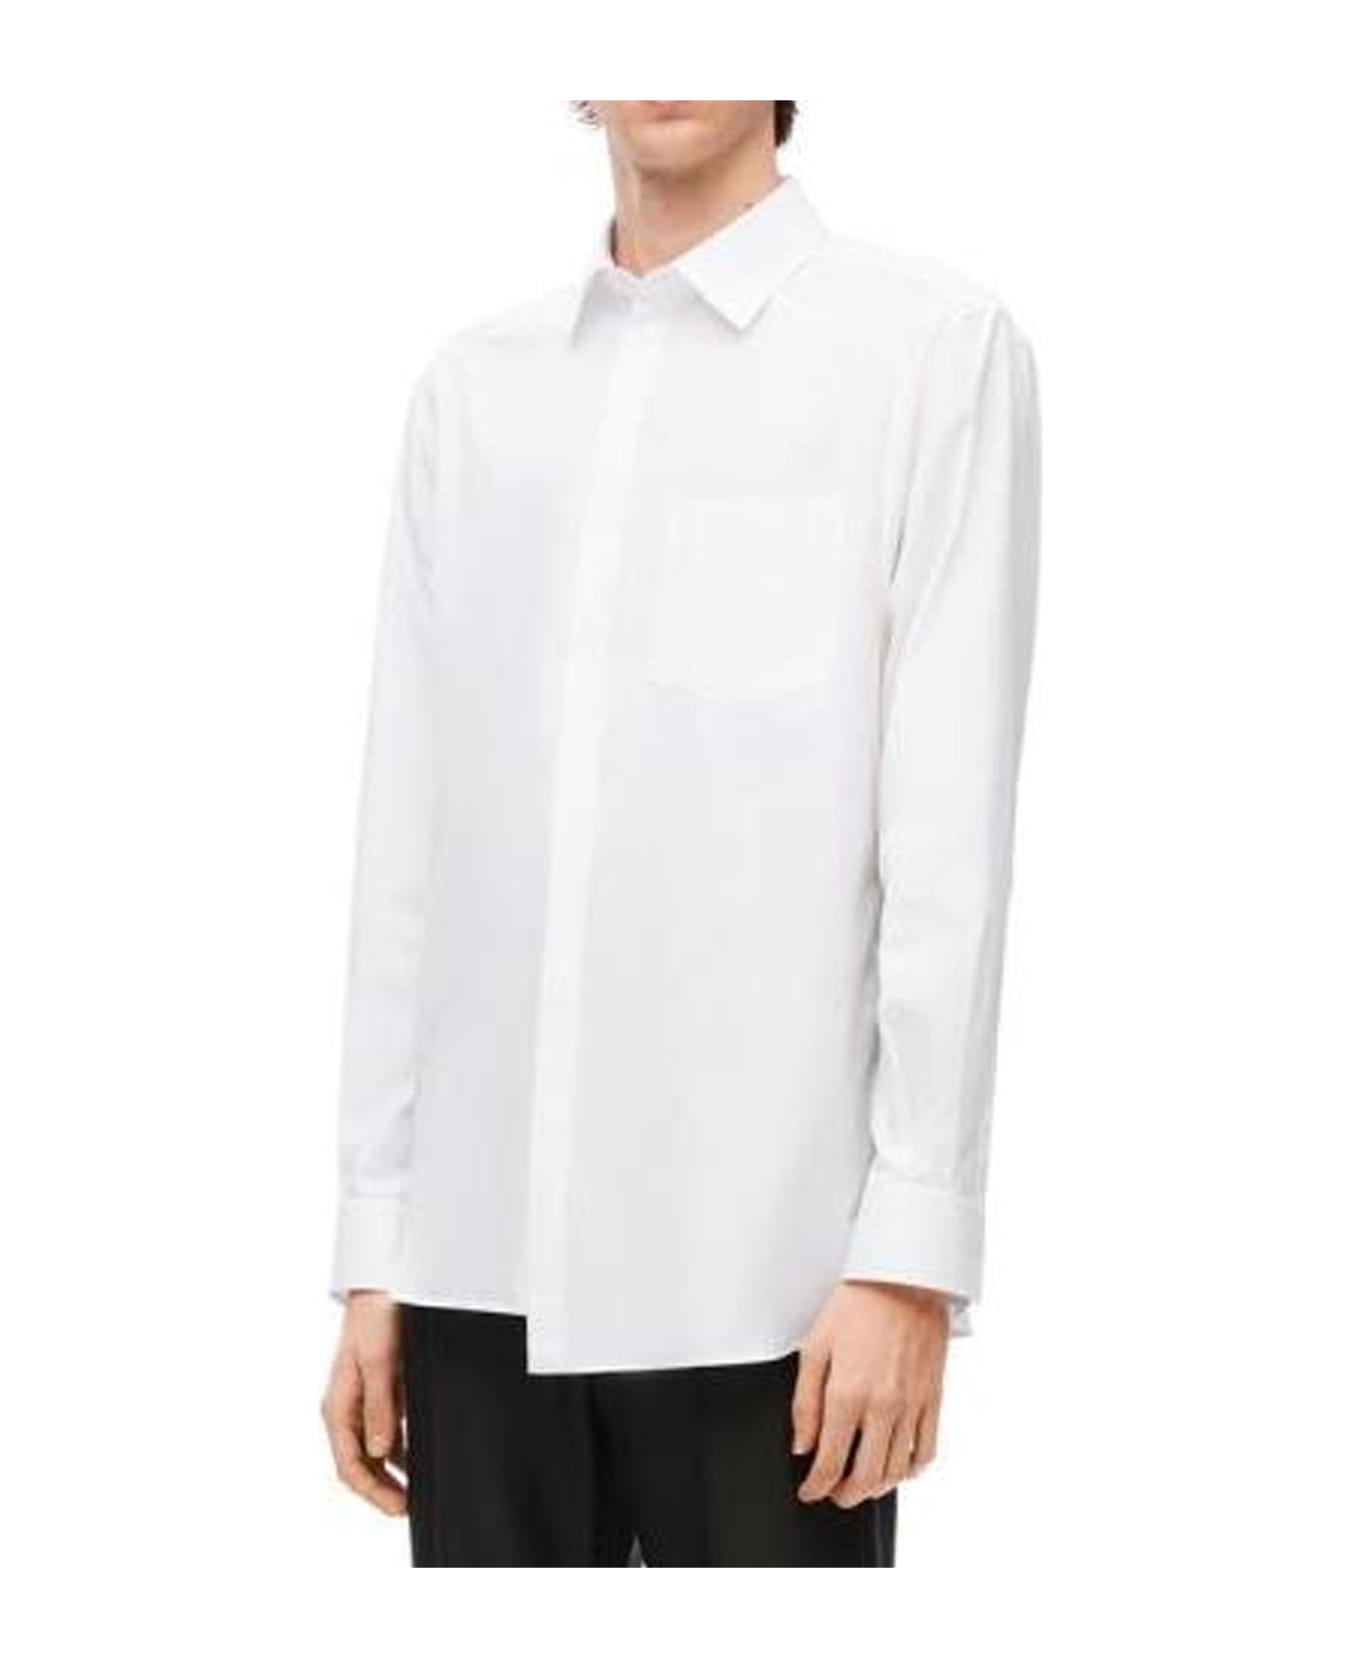 Loewe Asymmetric Shirt - White